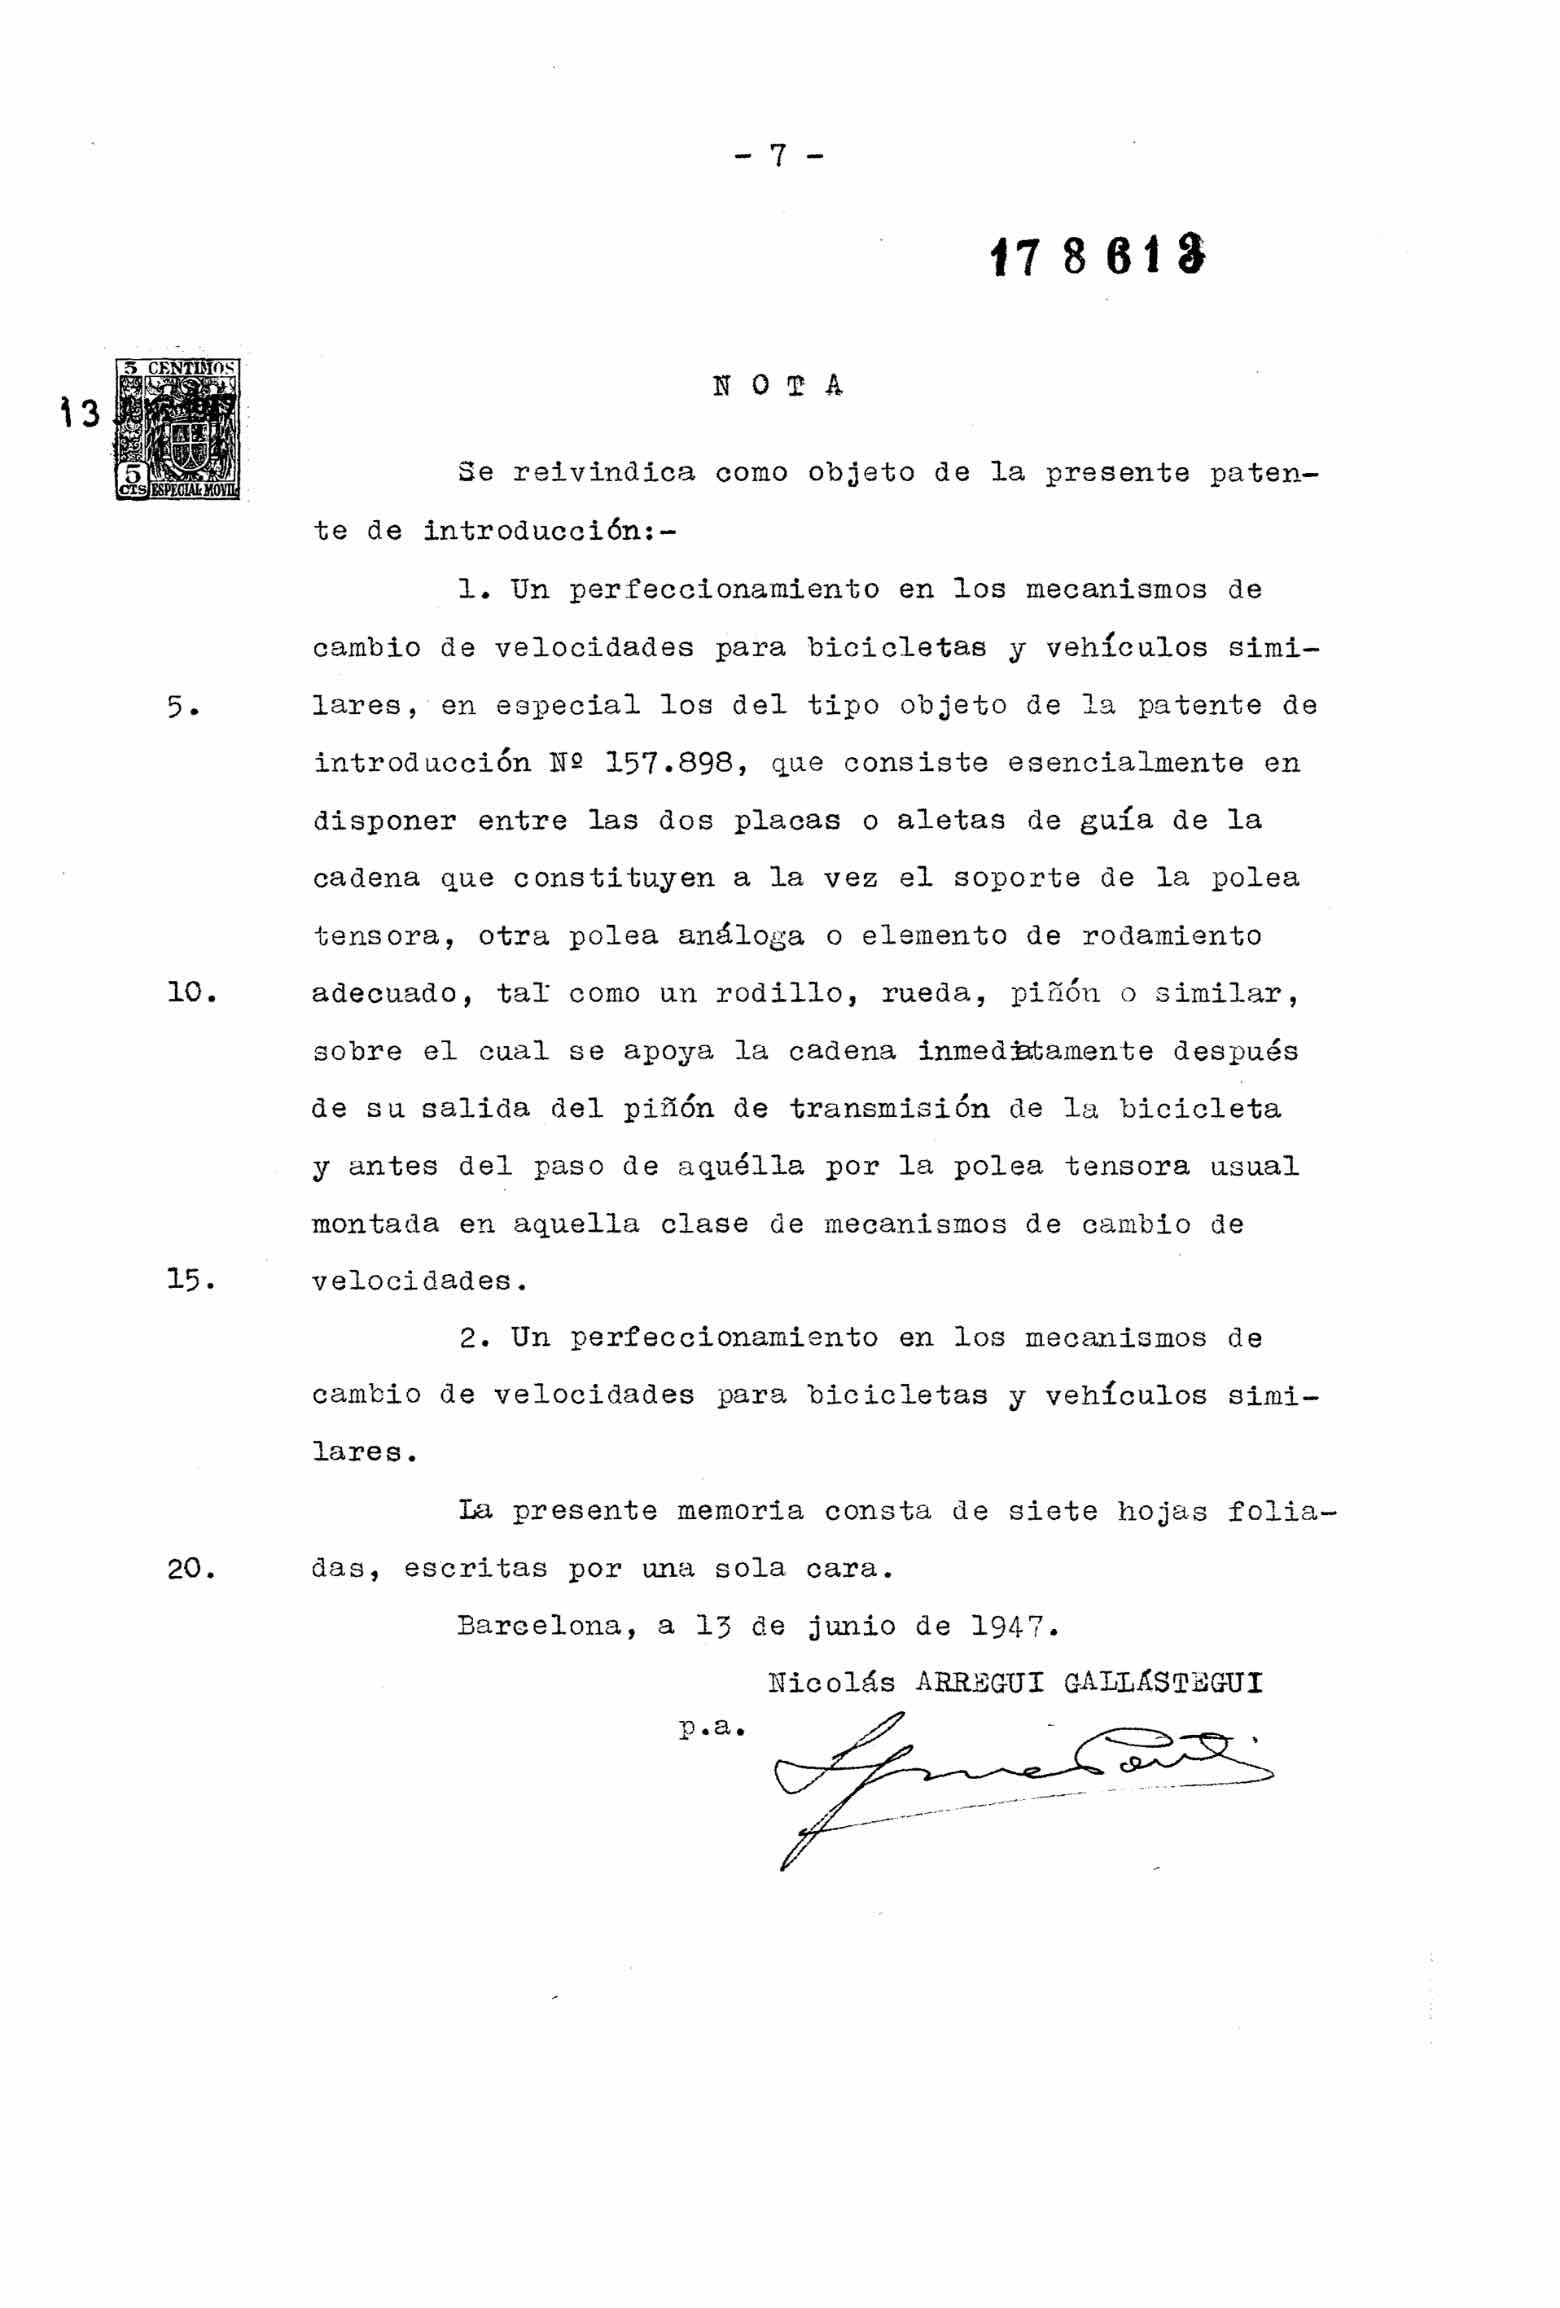 Spanish Patent 178,613 - Zeus scan 7 main image